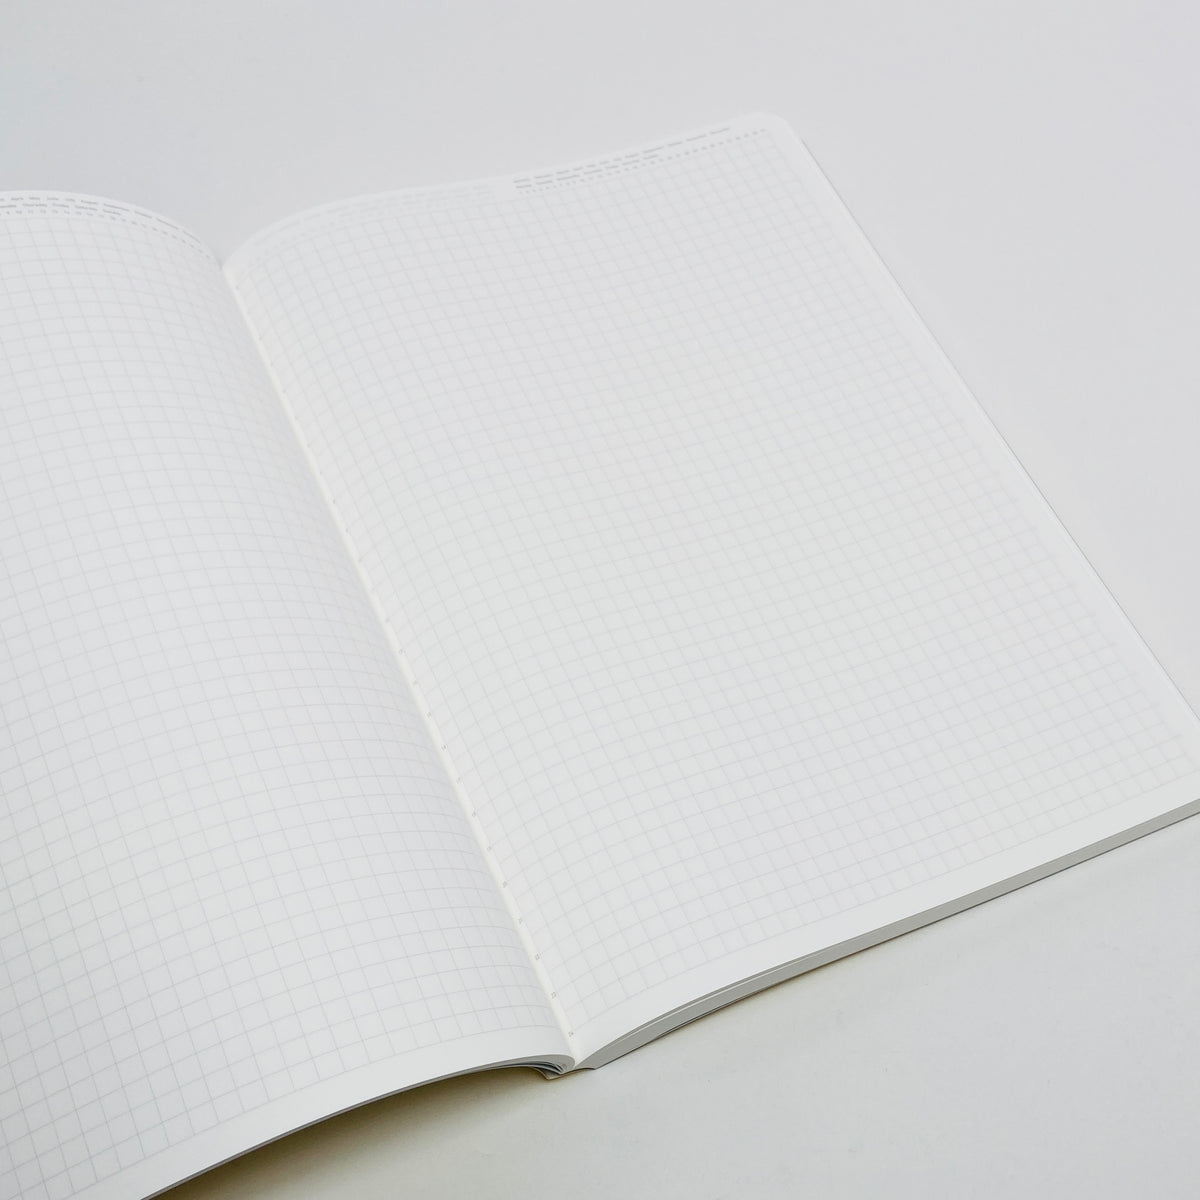 Kleid Tiny Grid B6 Notebook - Light Blue